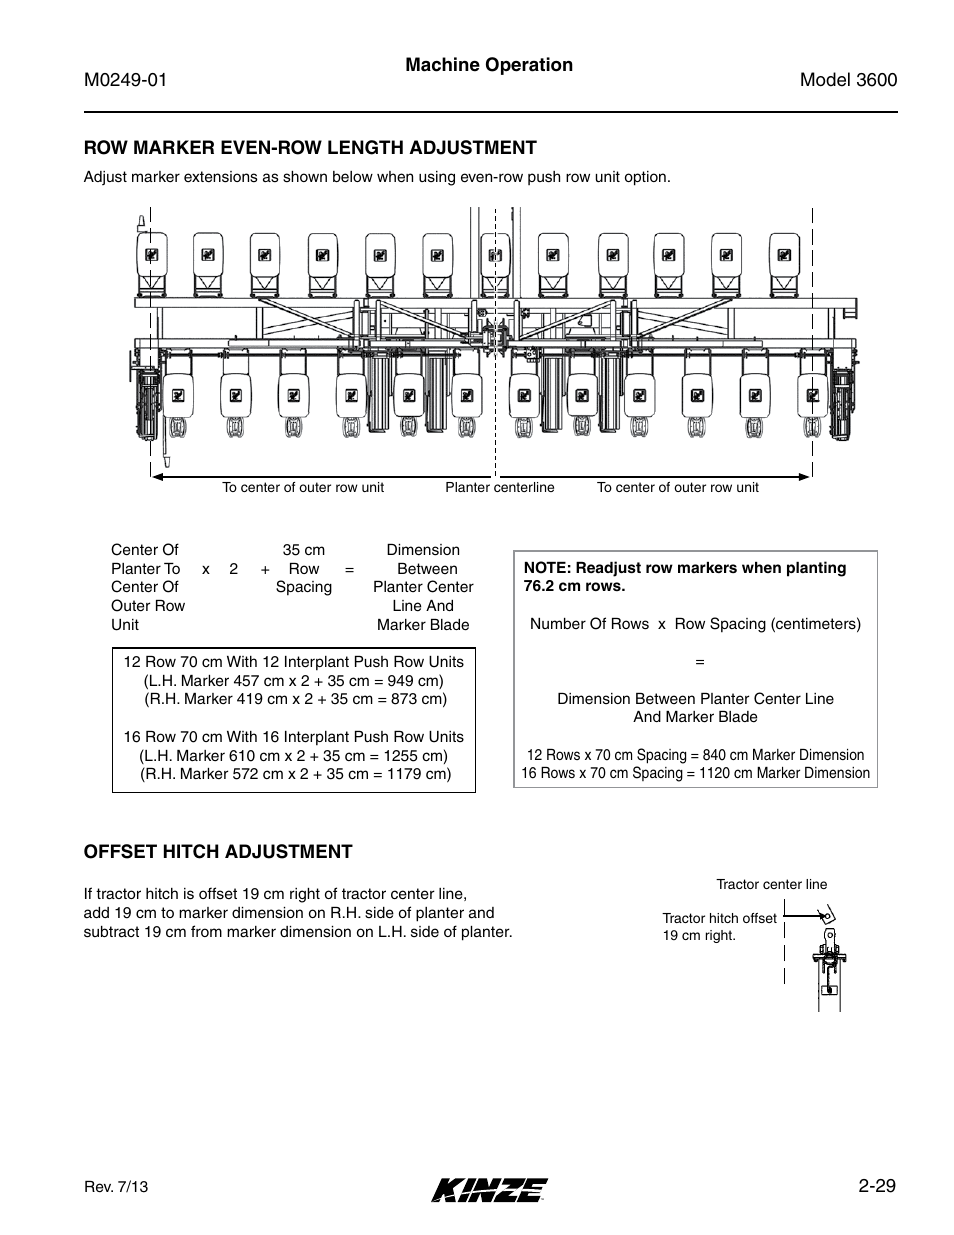 Row marker even-row length adjustment, Offset hitch adjustment, Row marker even-row length adjustment -29 | Offset hitch adjustment -29 | Kinze 3600 Lift and Rotate Planter (70 CM) Rev. 5/14 User Manual | Page 41 / 158